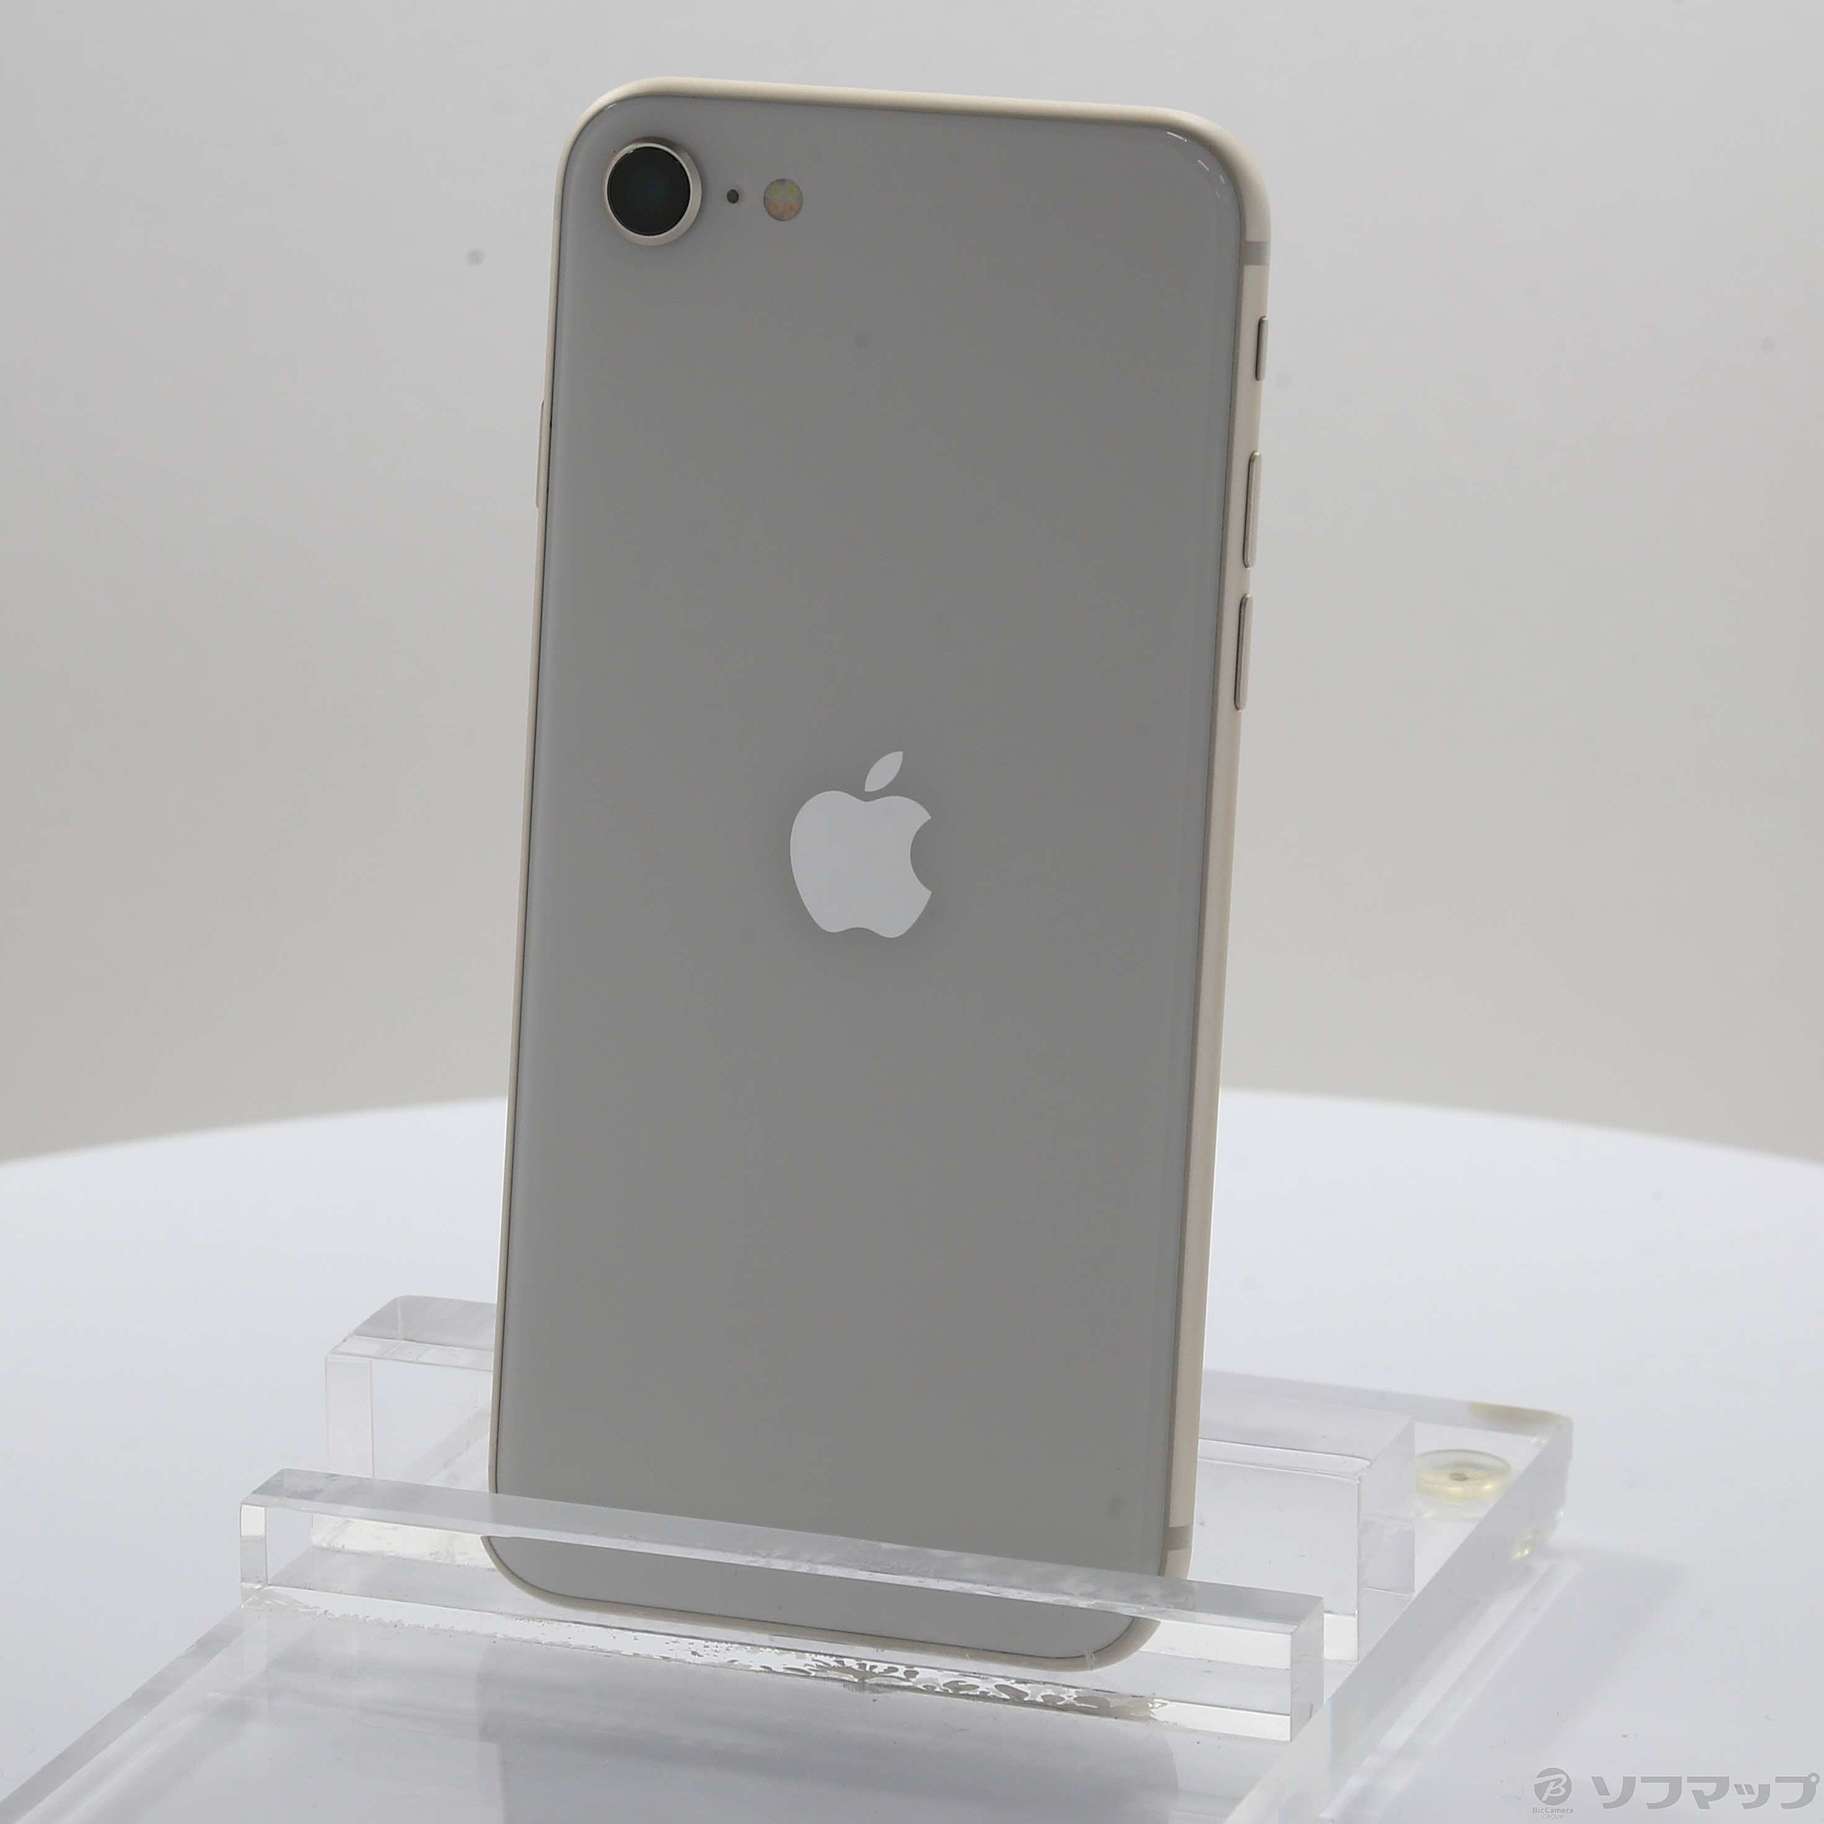 iPhone SE 第3世代 128GB スターライト SIMフリー - tsm.ac.in